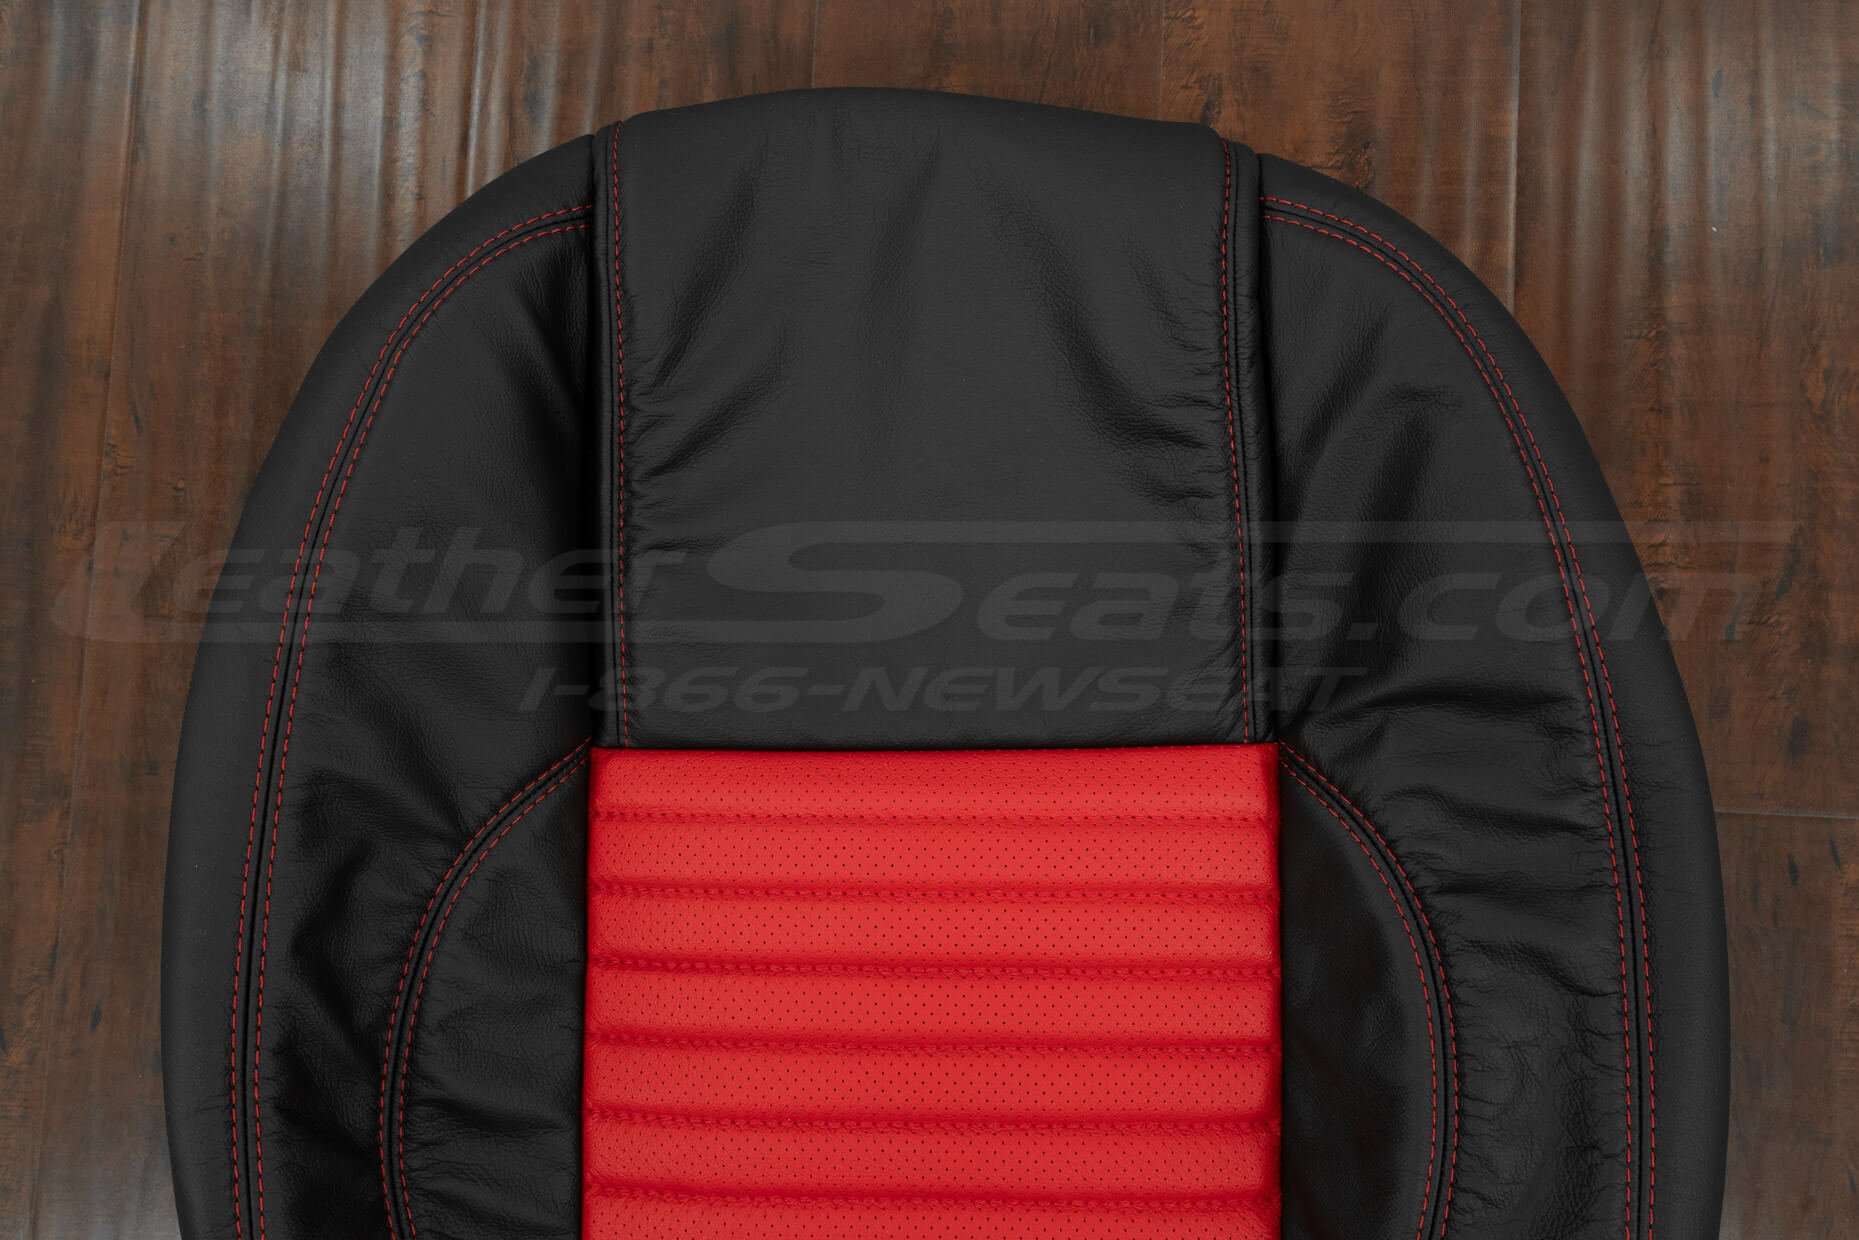 Upper seton of front backrest upholstery